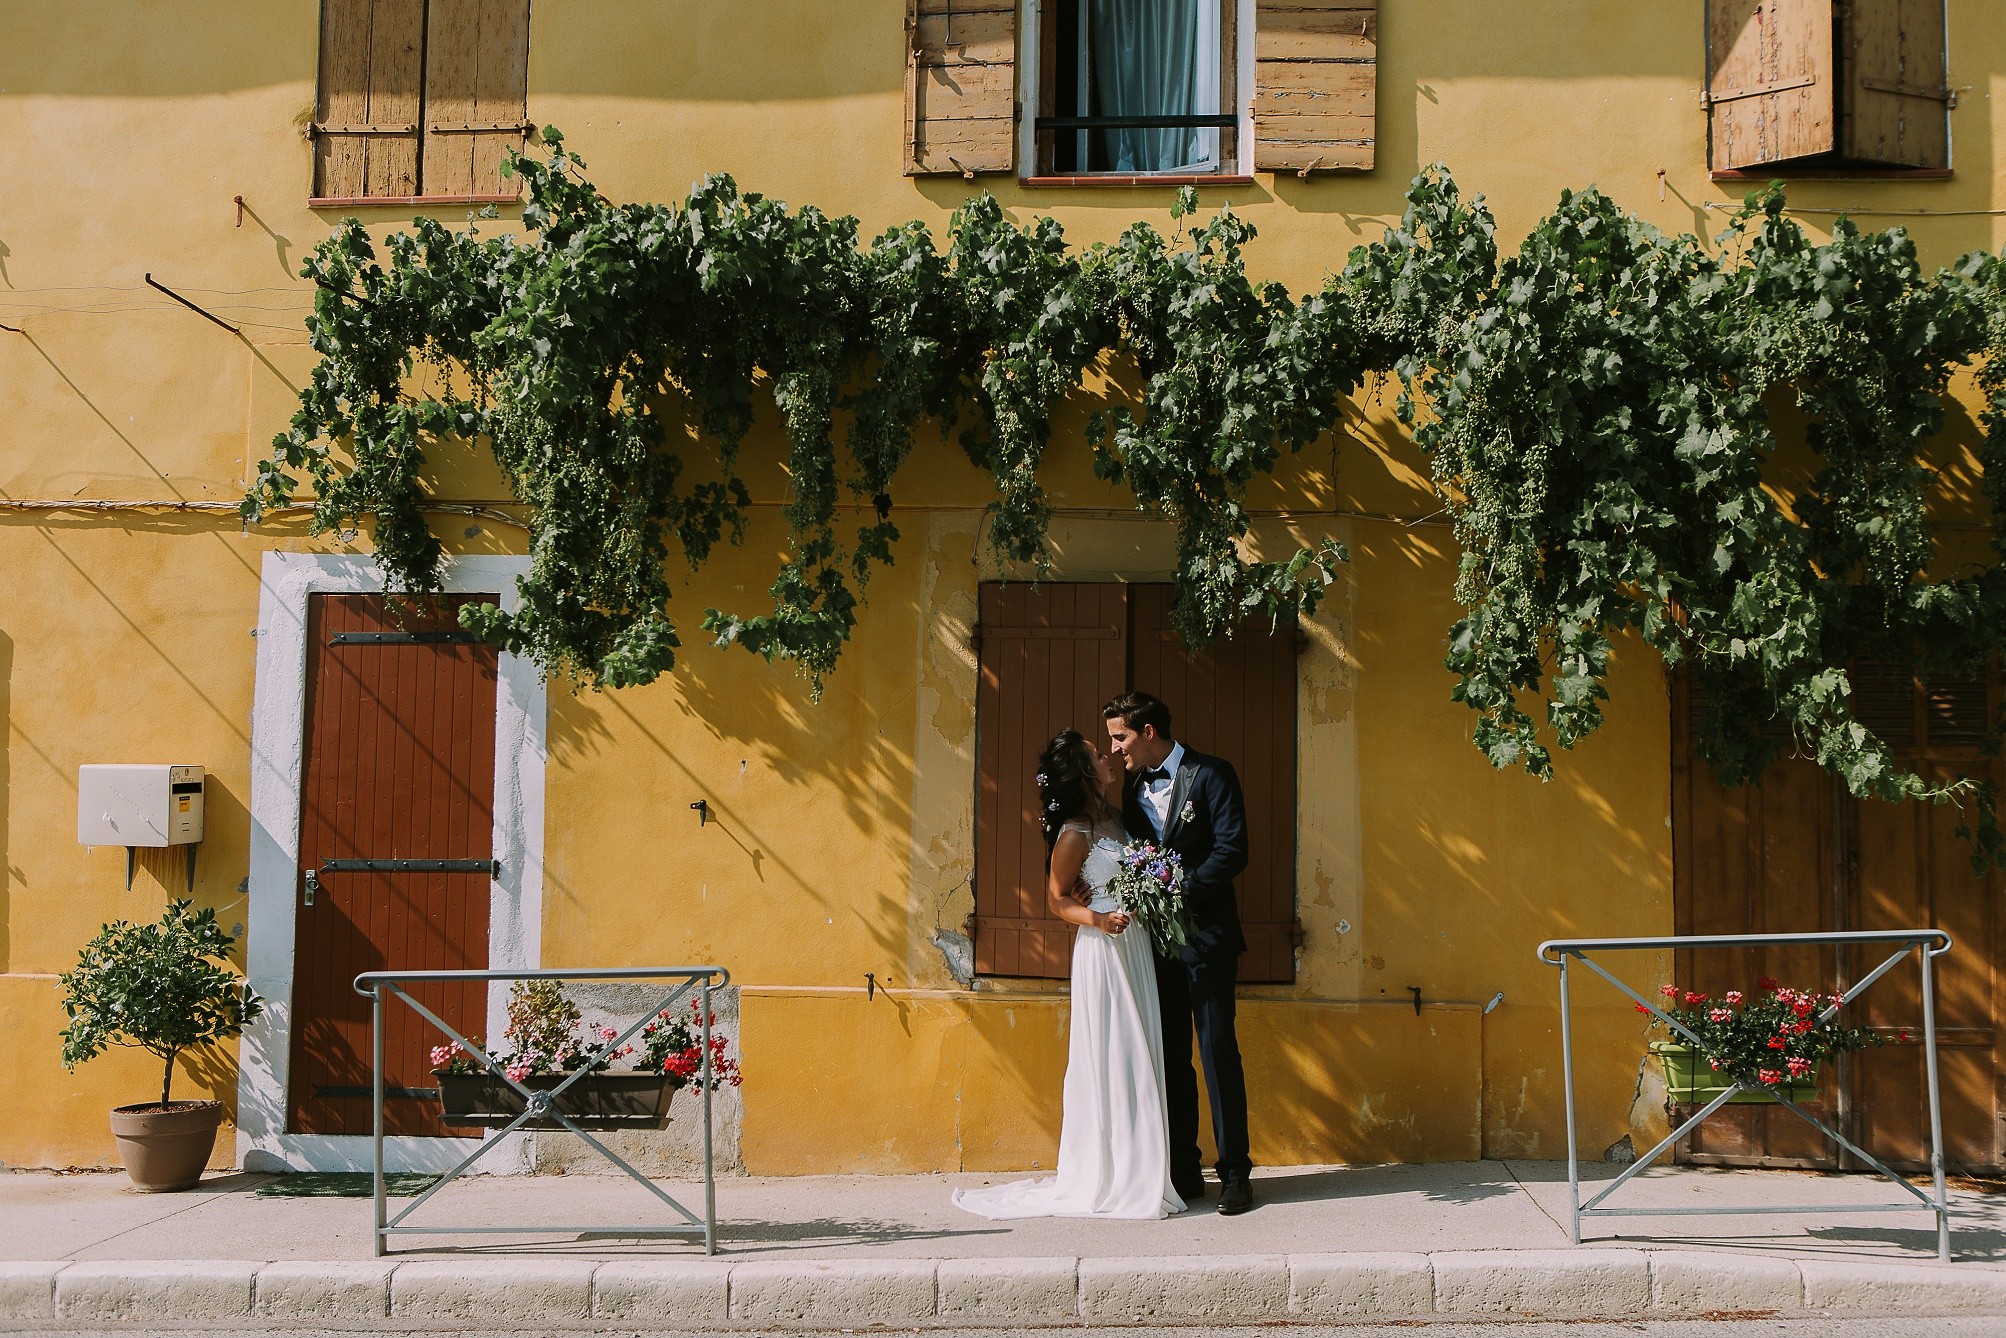 katerynaphotos-mariage-photographe-puyloubier-provence-aix-en-provence-sud-de-la-france_0381.jpg